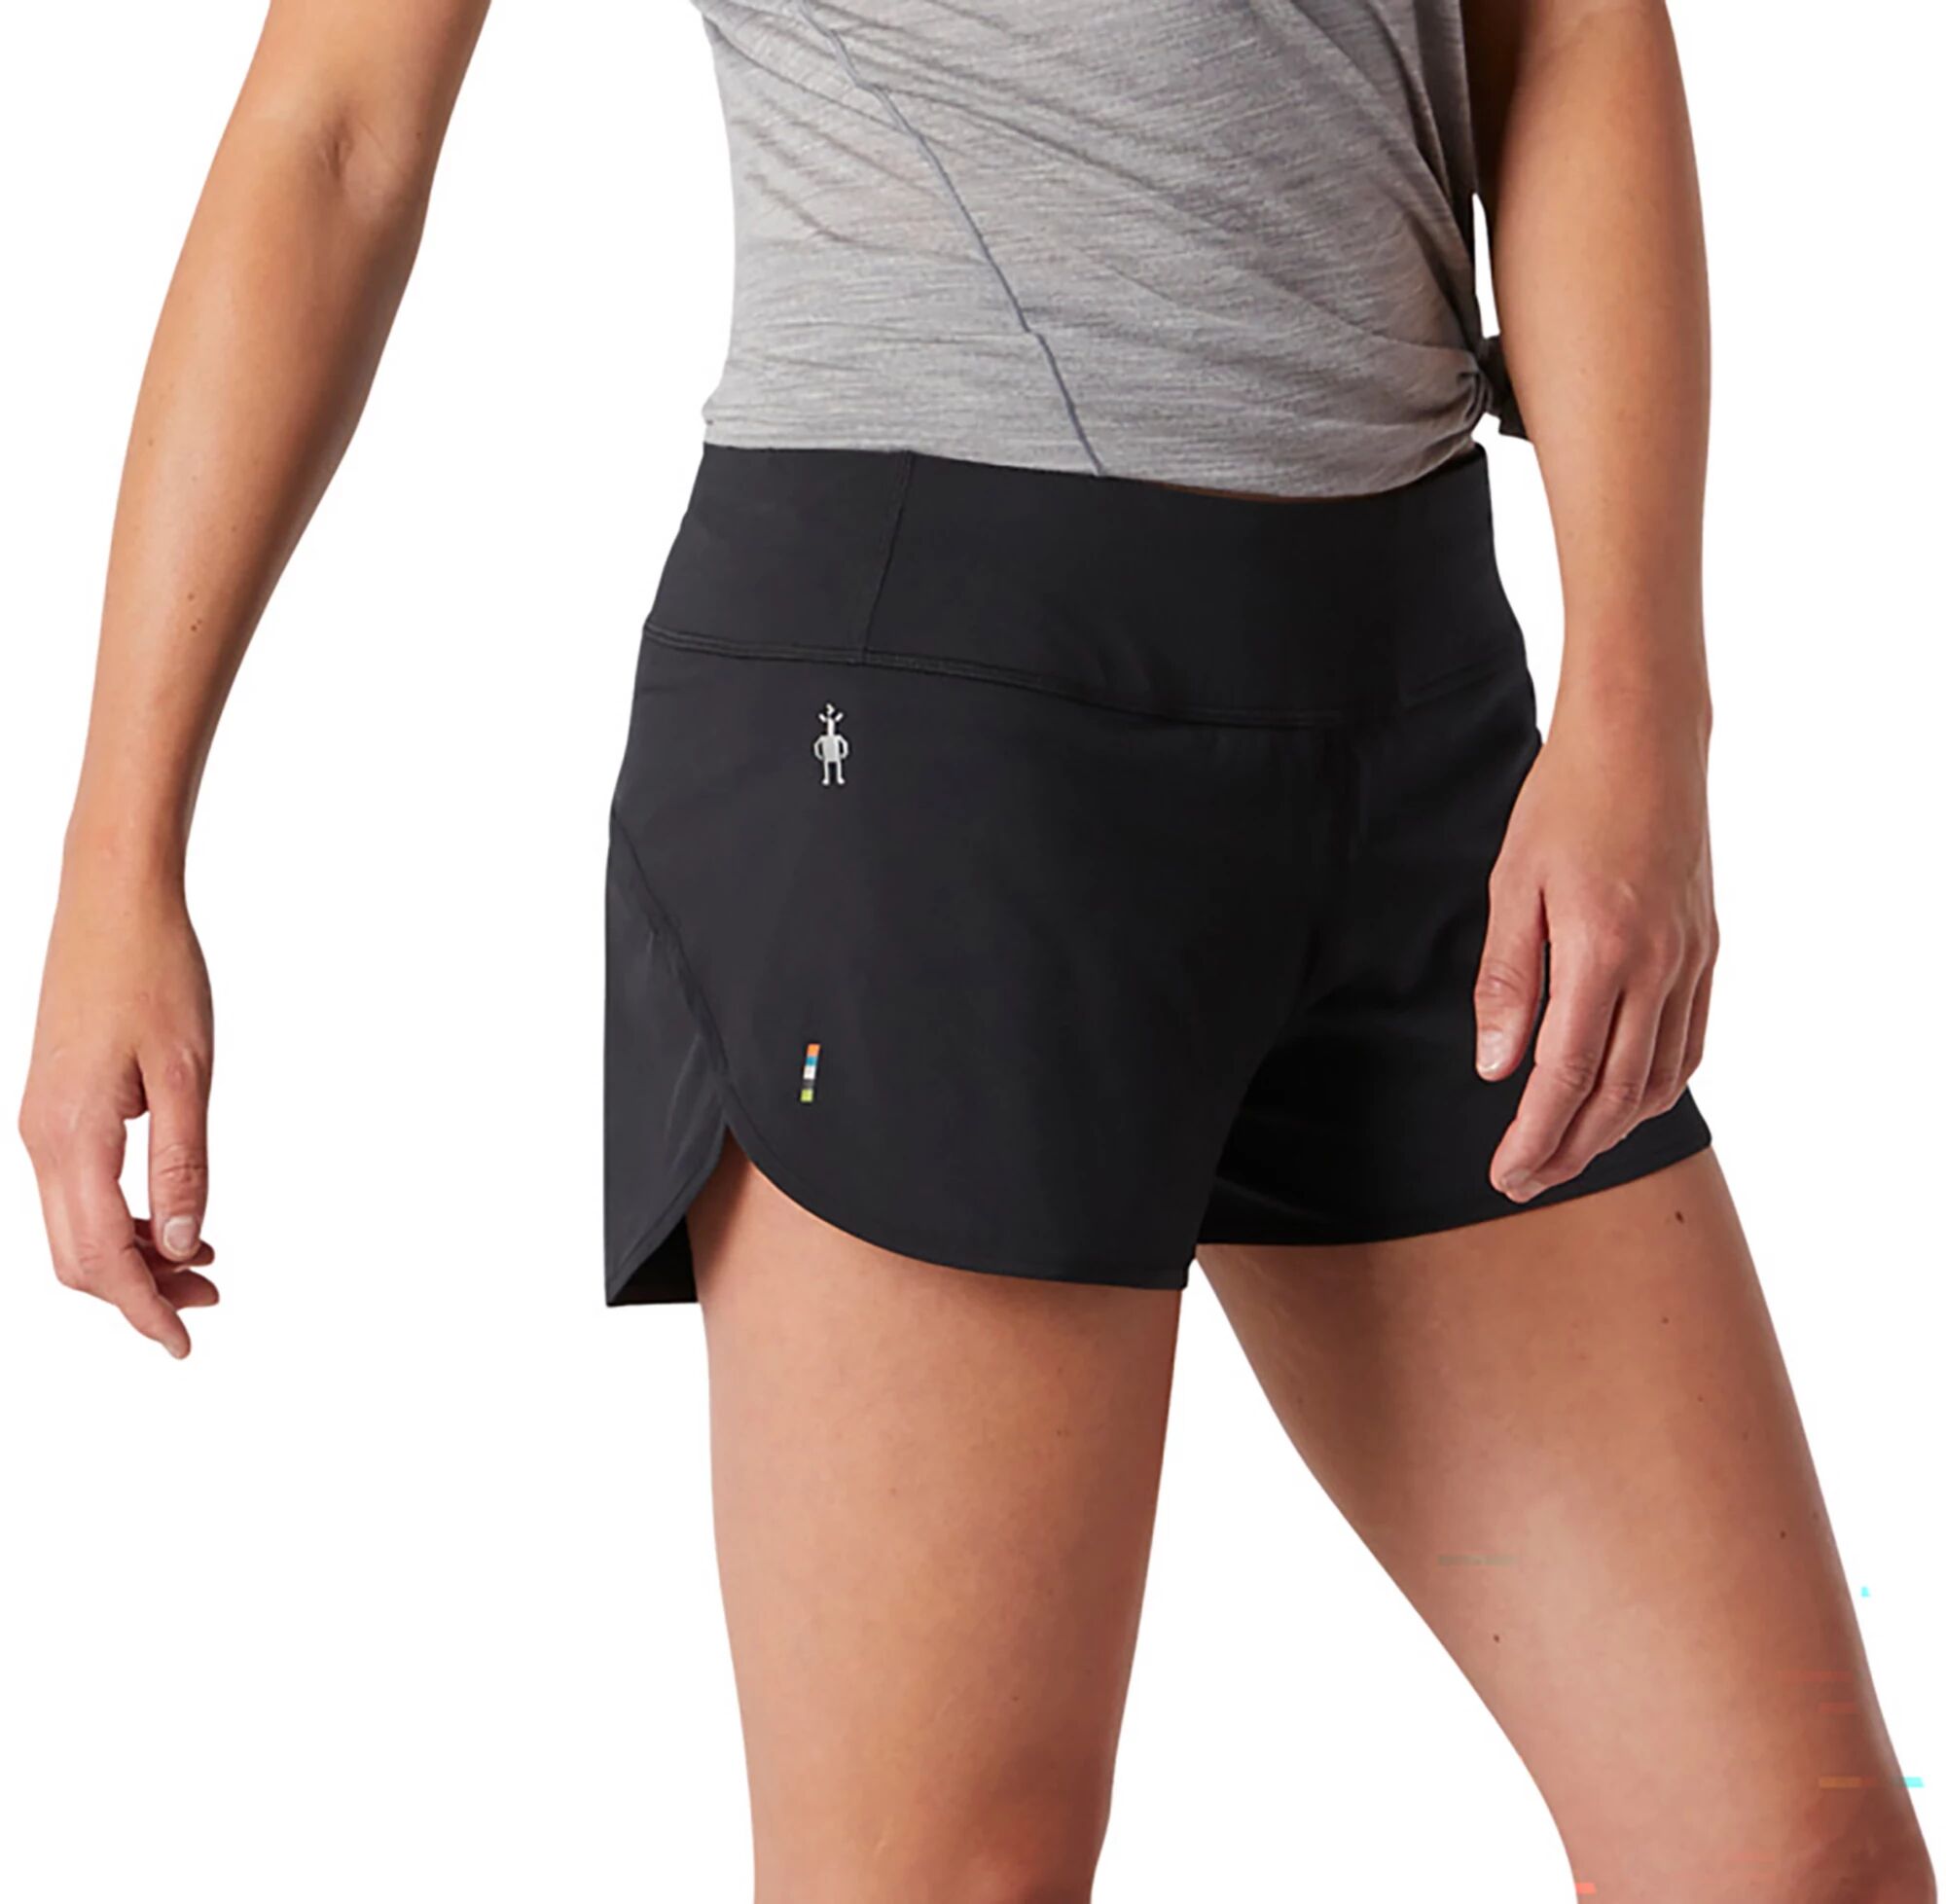 Smartwool Women's Merino Sport Lined Shorts, Small, Black